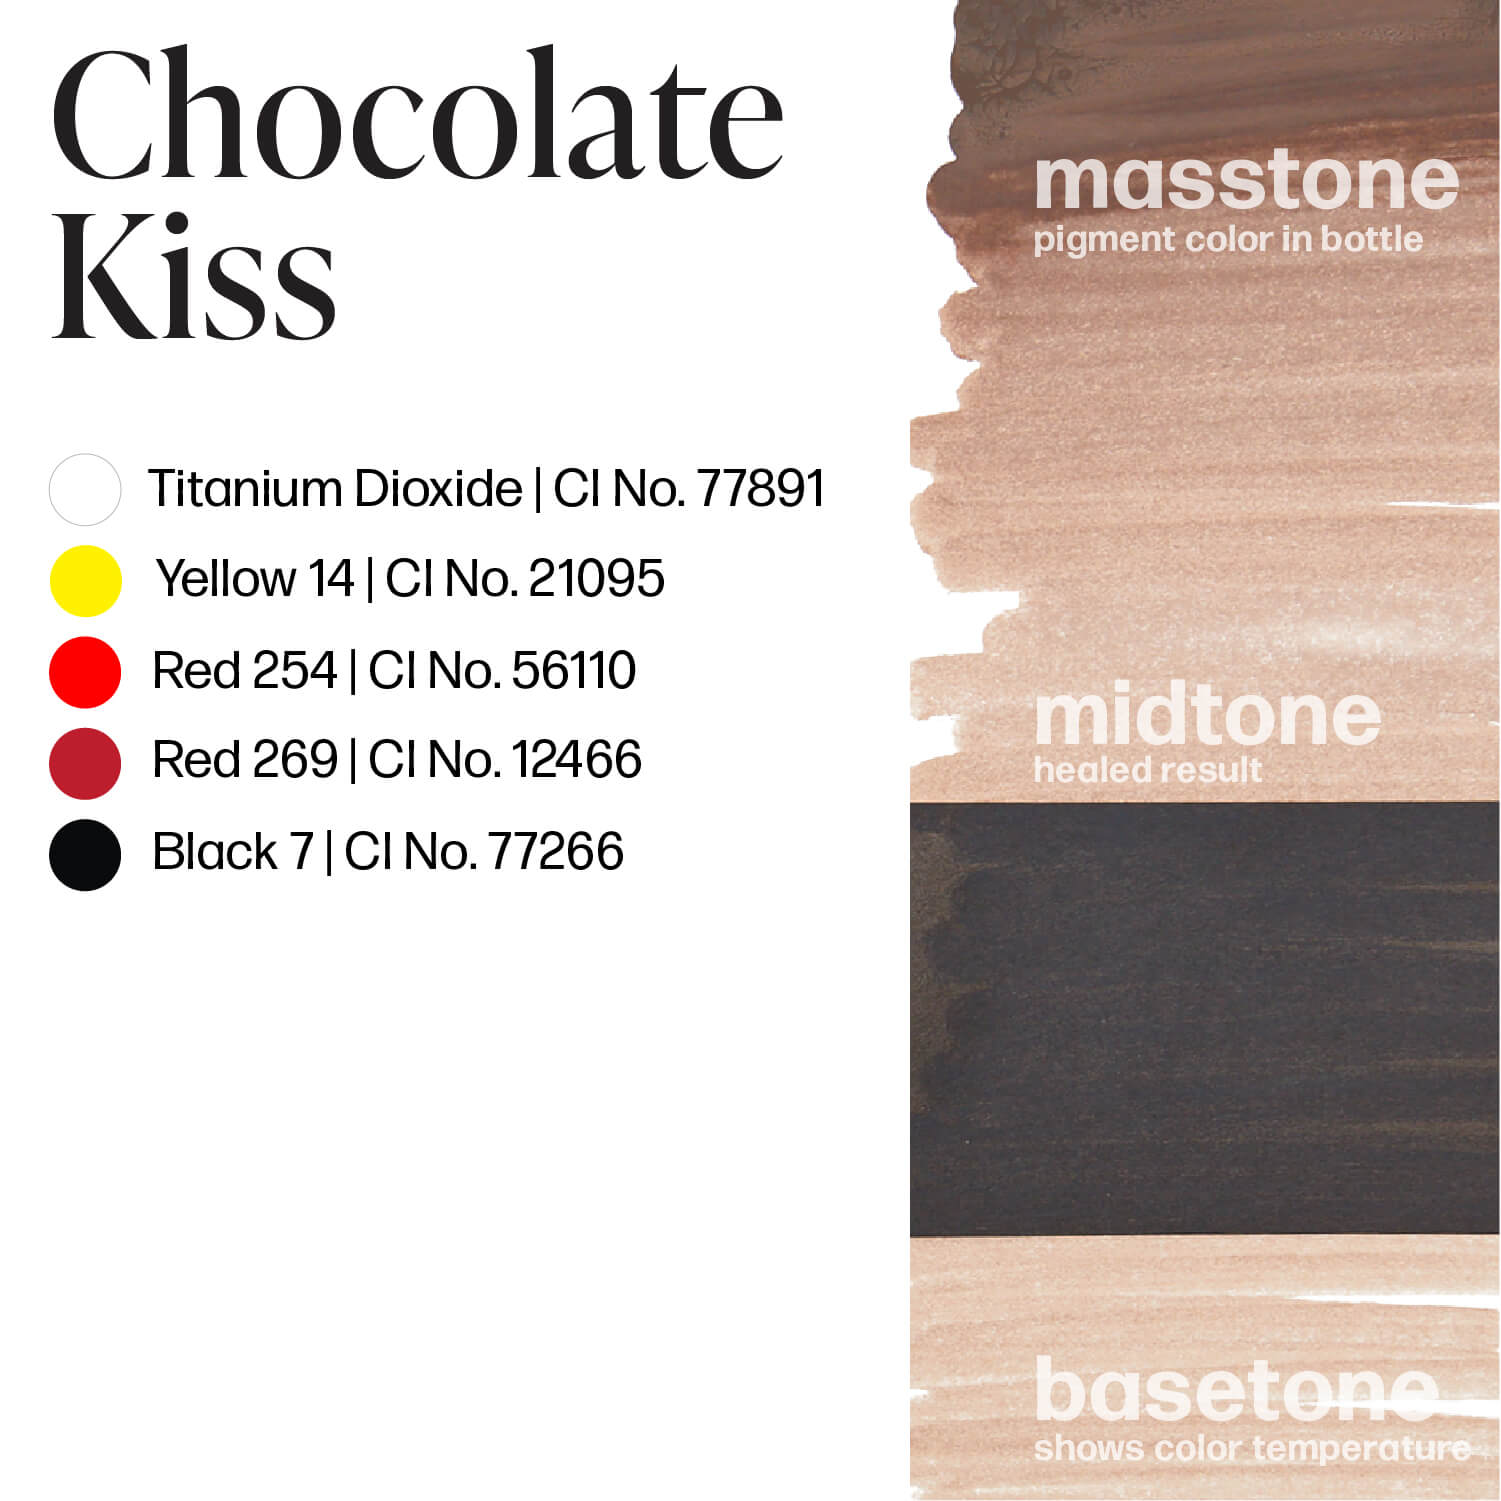 Perma Blend Chocolate Kiss Brow Ink Masstone Midtone Basetone